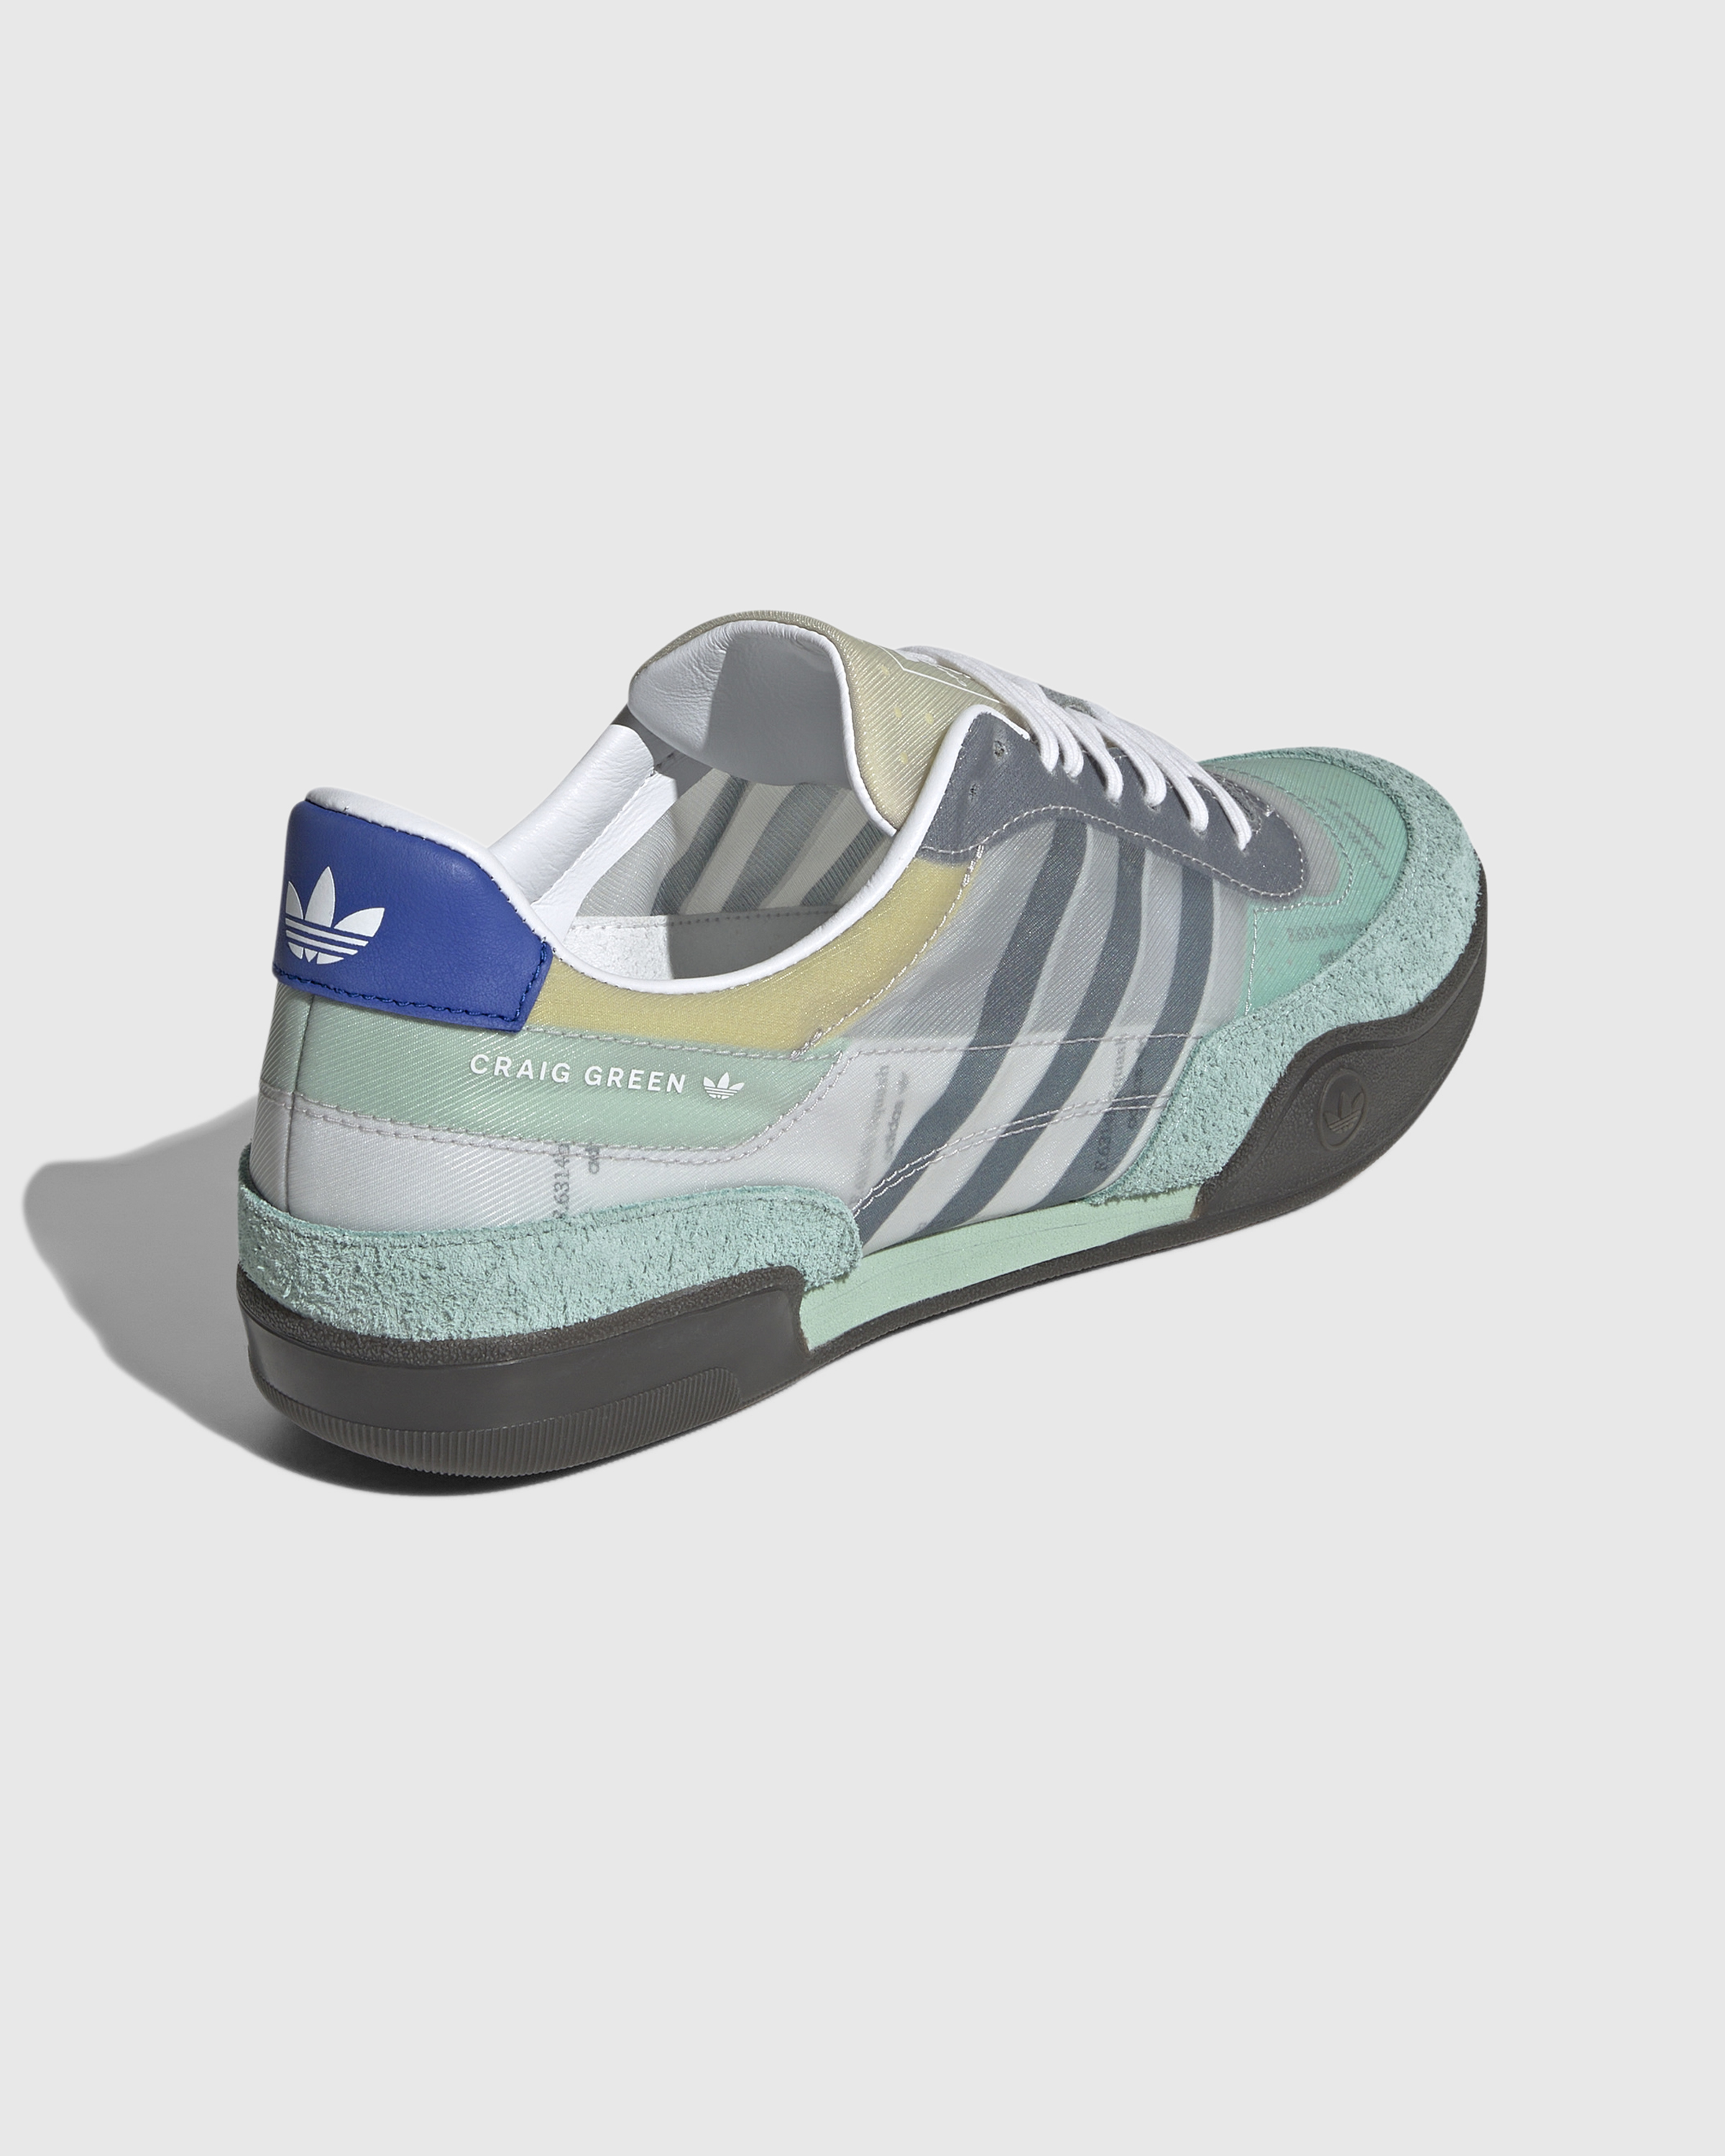 Adidas x Craig Green – Squash Polta Akh Green/Core White/Gum - Low Top Sneakers - Green - Image 4